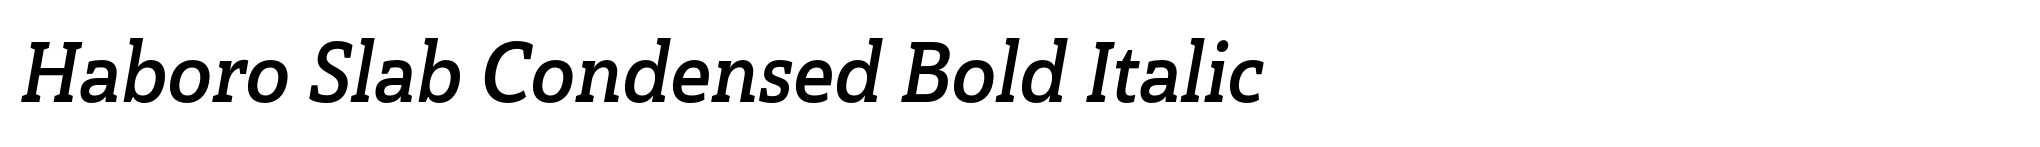 Haboro Slab Condensed Bold Italic image